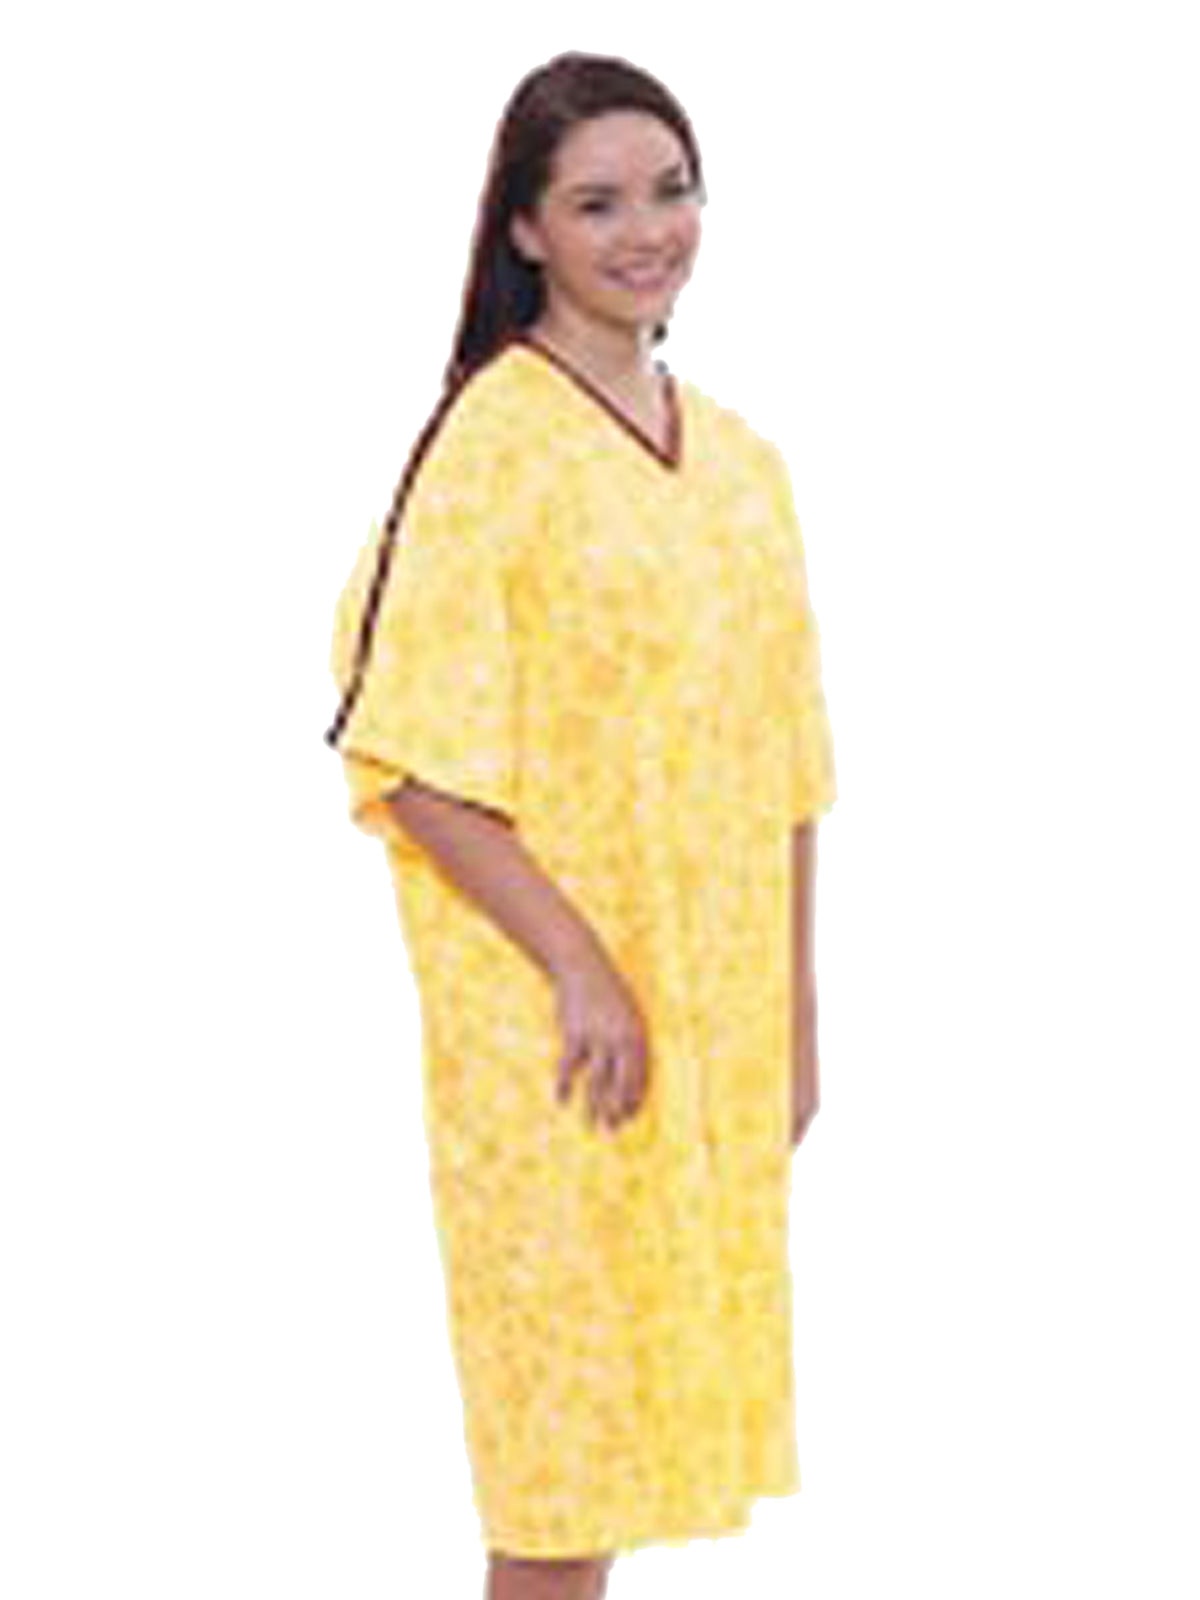 Unisex Premium Patient Gown - 611 - Amber Radiance